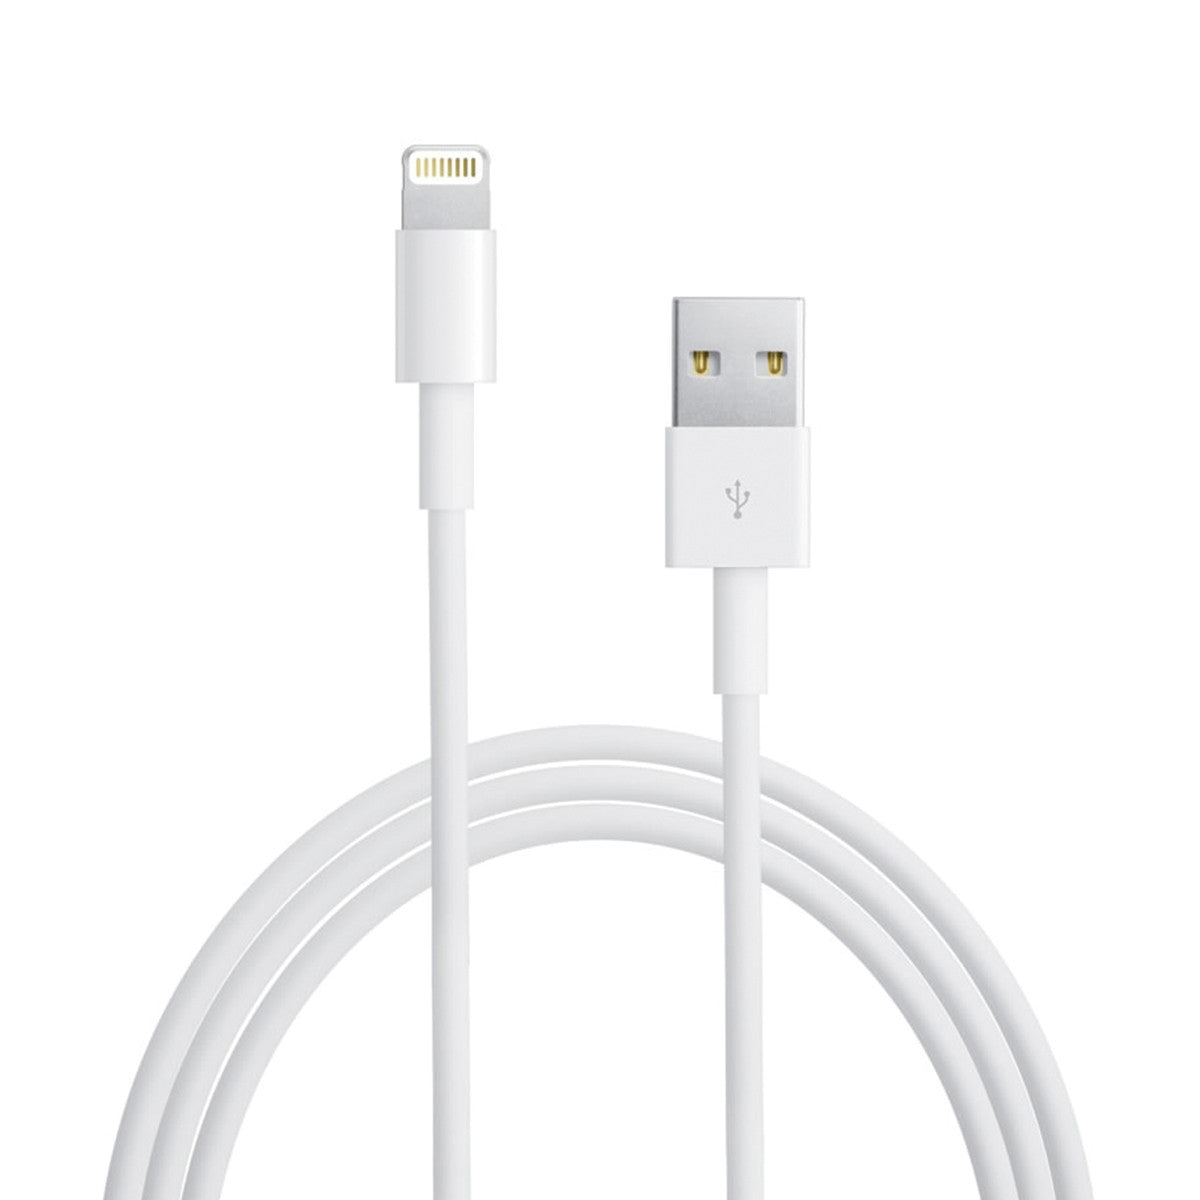 50cm 1m 2m Lightning Cable For Apple iPhone iPad Pro Mini Air iPod 1m  